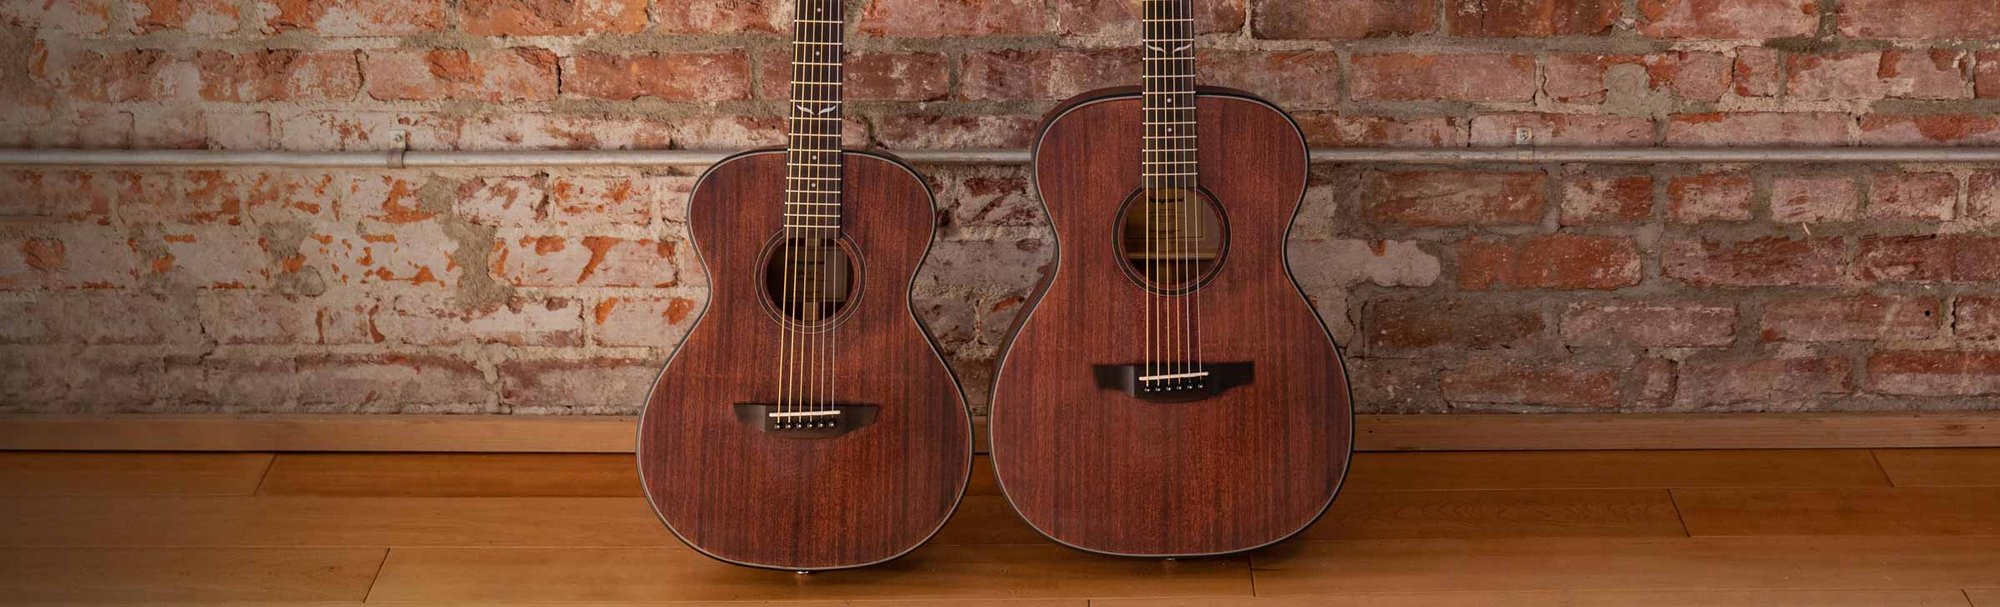 Oliver jr. mahogany and Oliver mahogany guitars against a brick wall